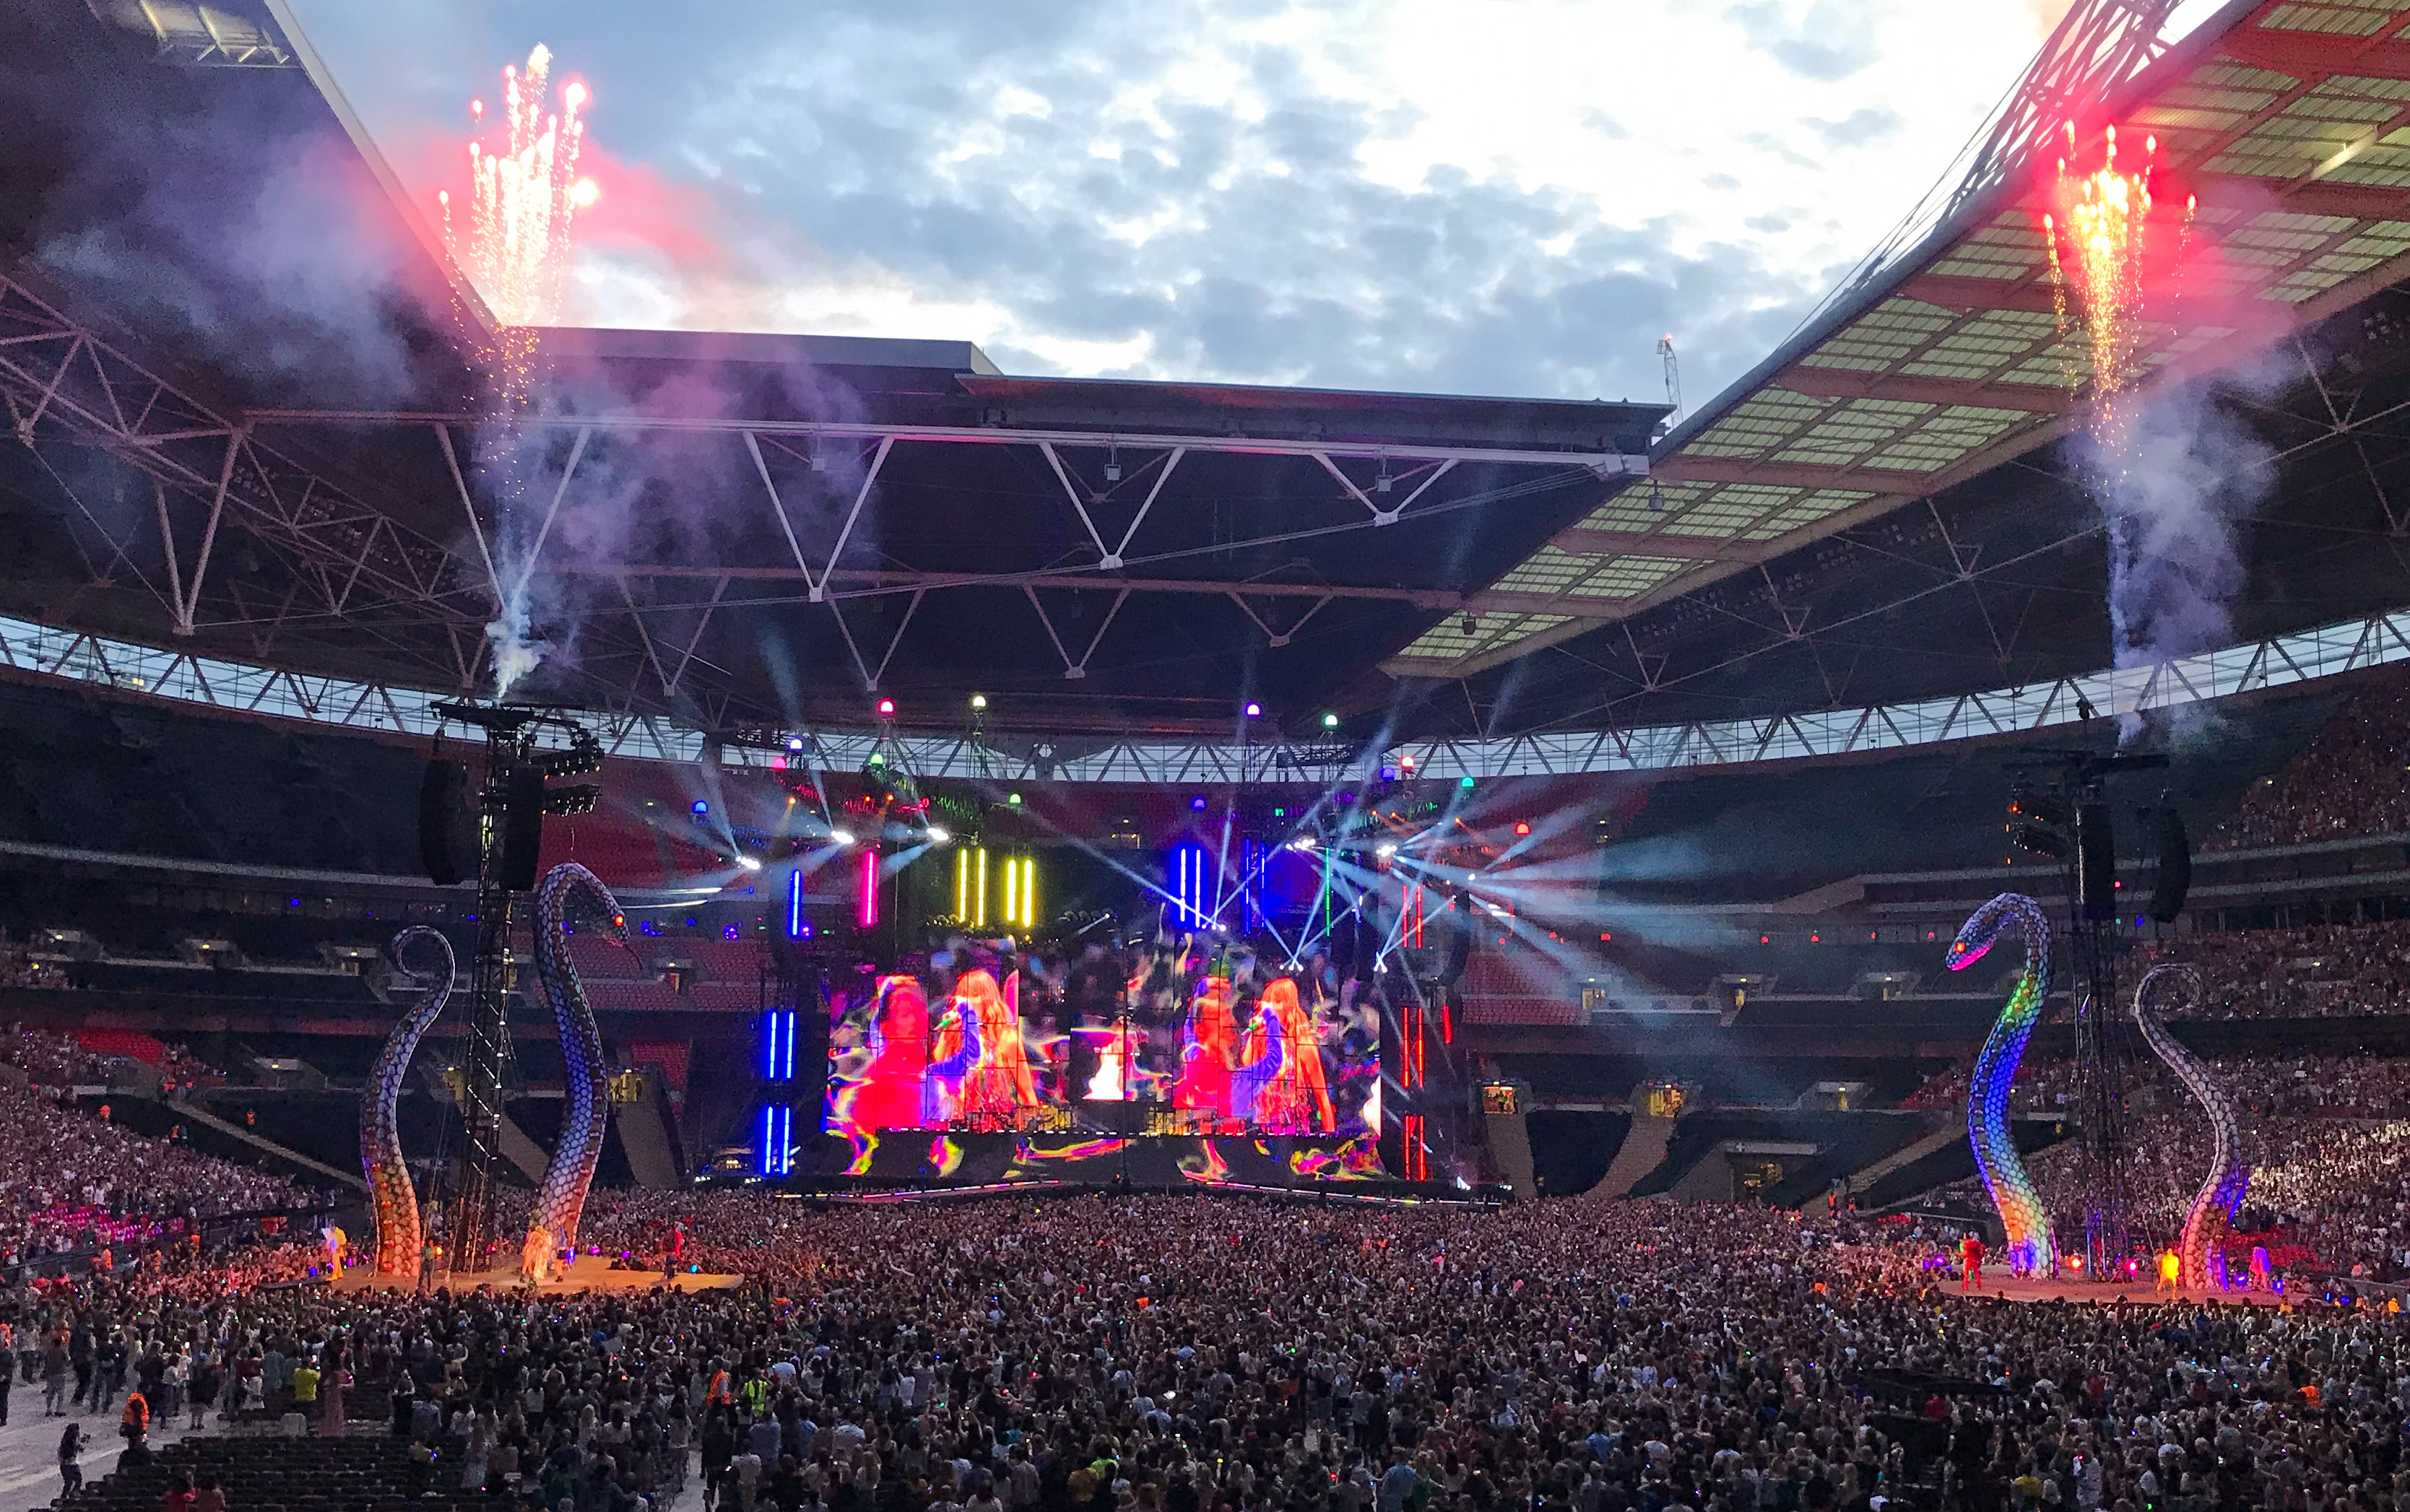 Taylor Swift's Reputation Stadium Tour London 2018. Wembley Stadium Stage, Shake It Off